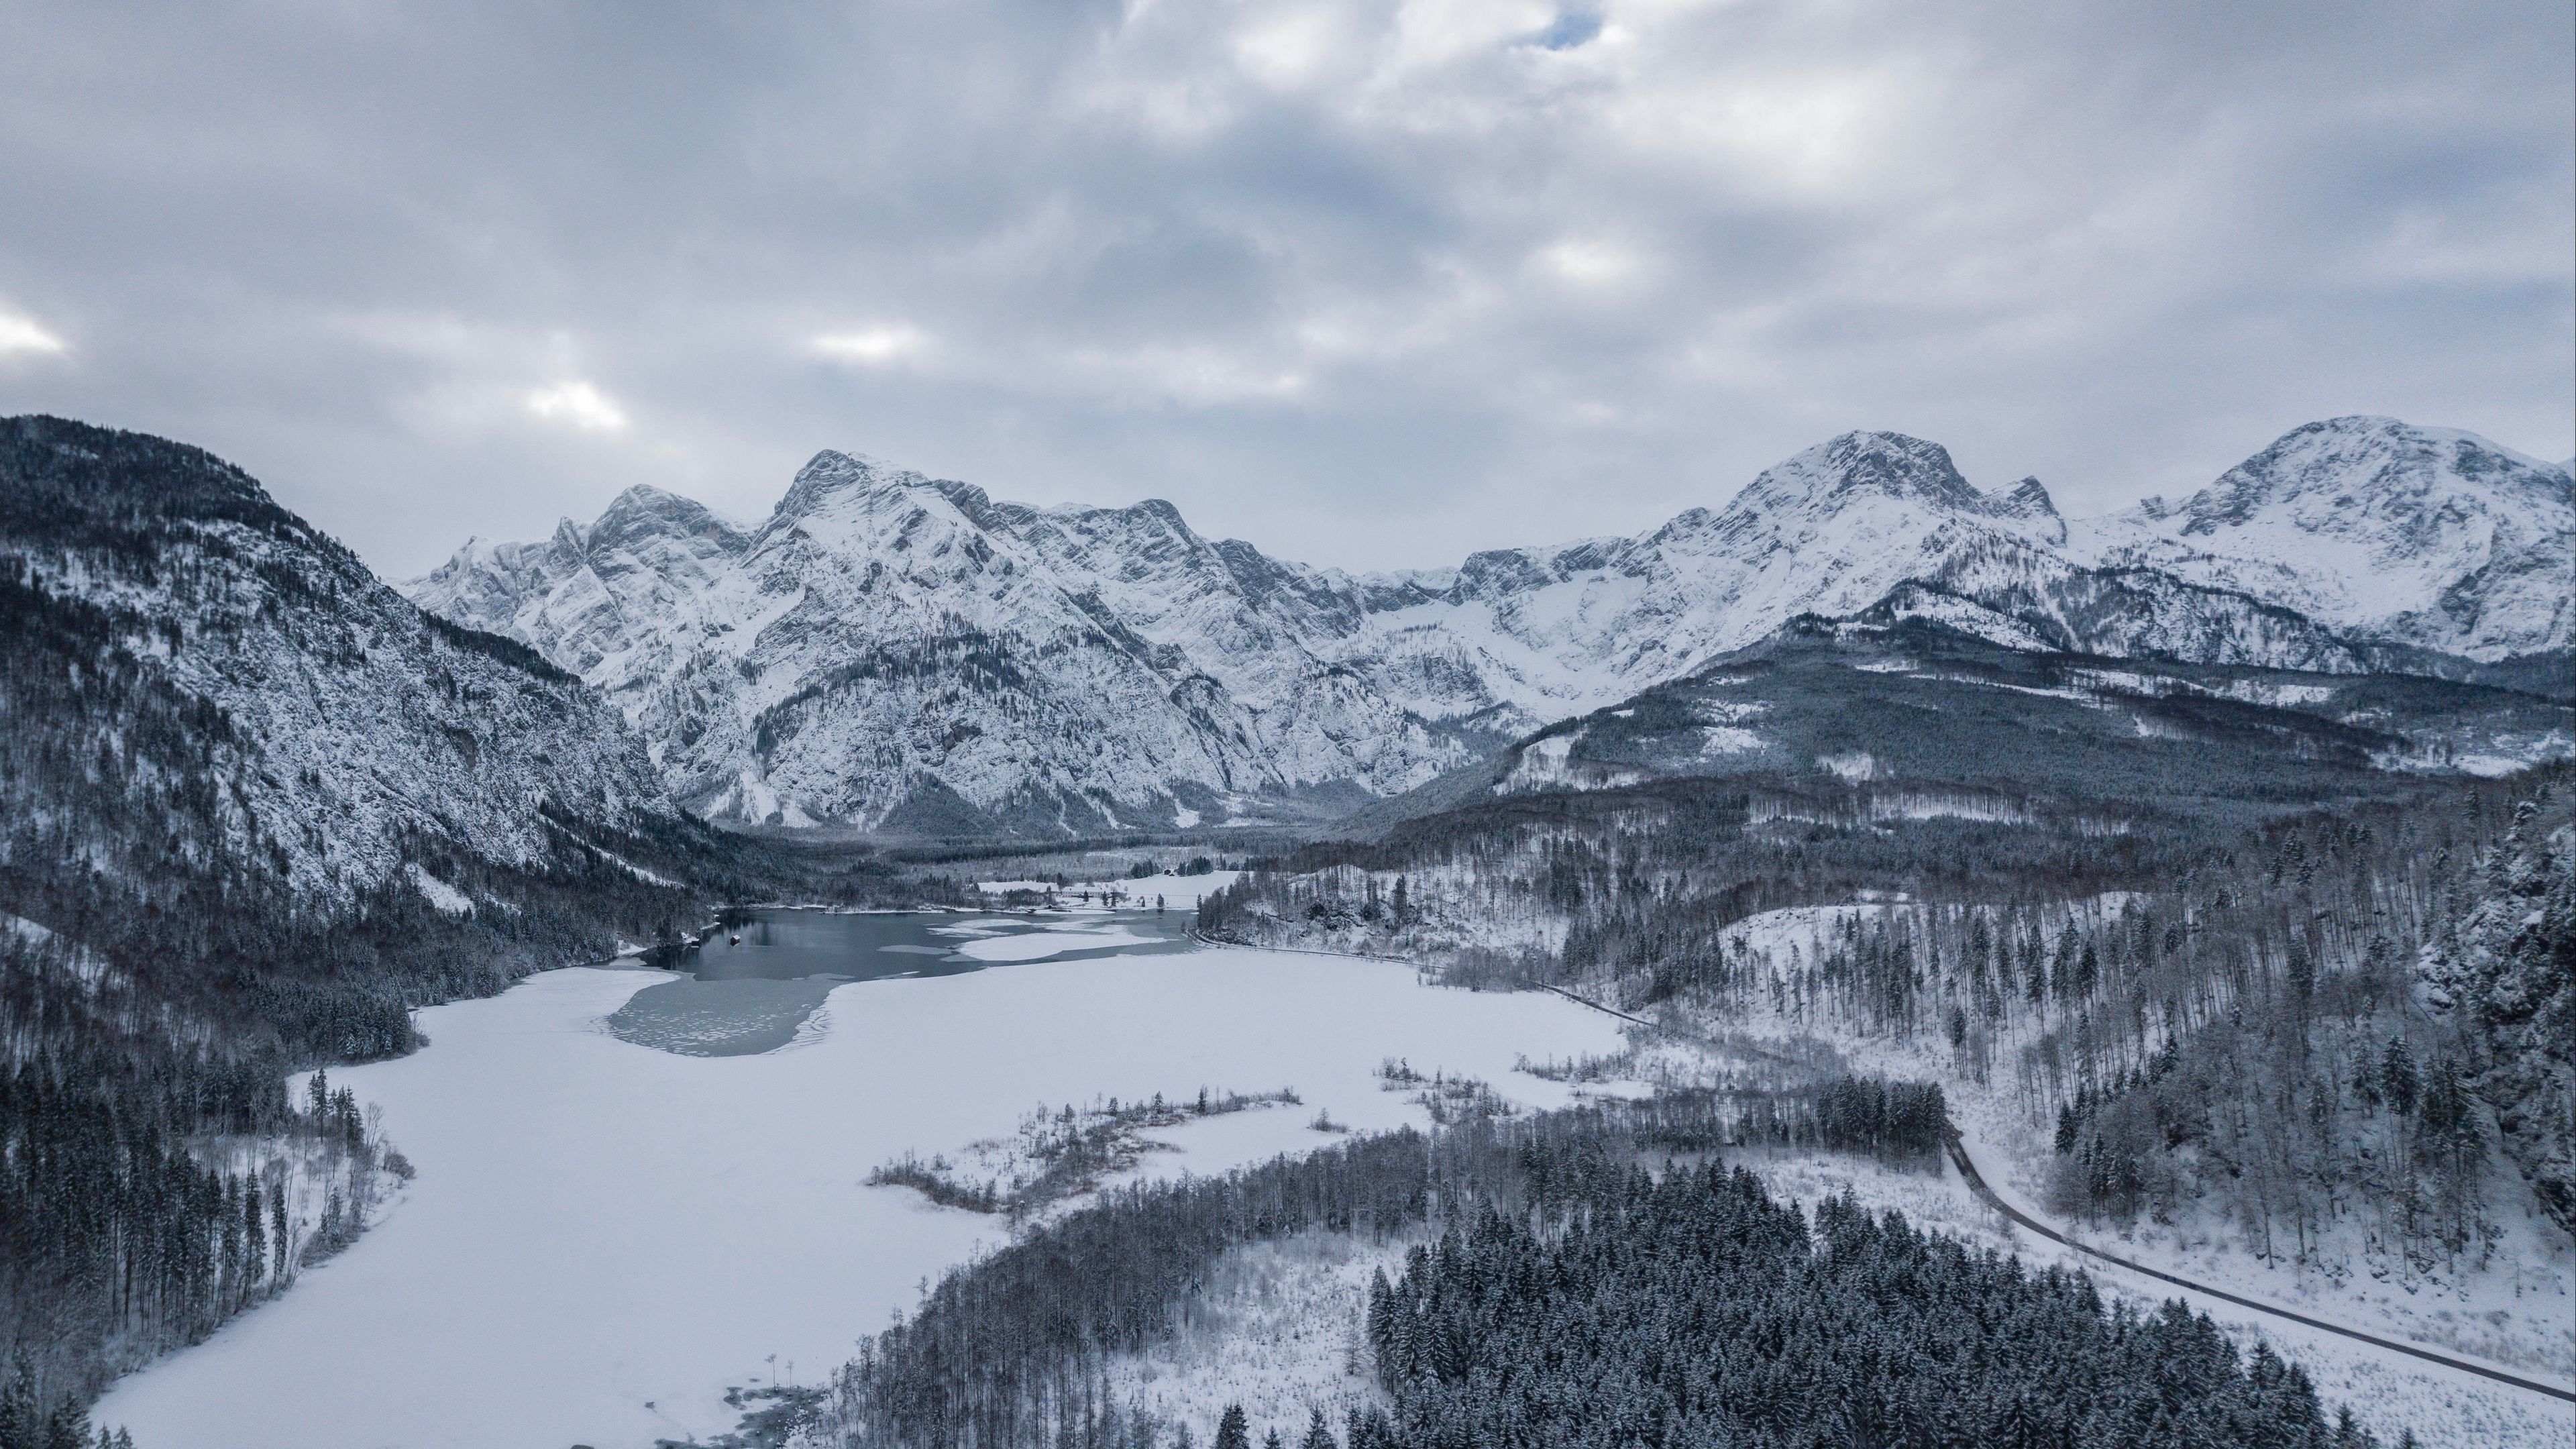 Download wallpaper 3840x2160 almsee, austria, mountains, winter, snow, lake 4k uhd 16:9 HD background